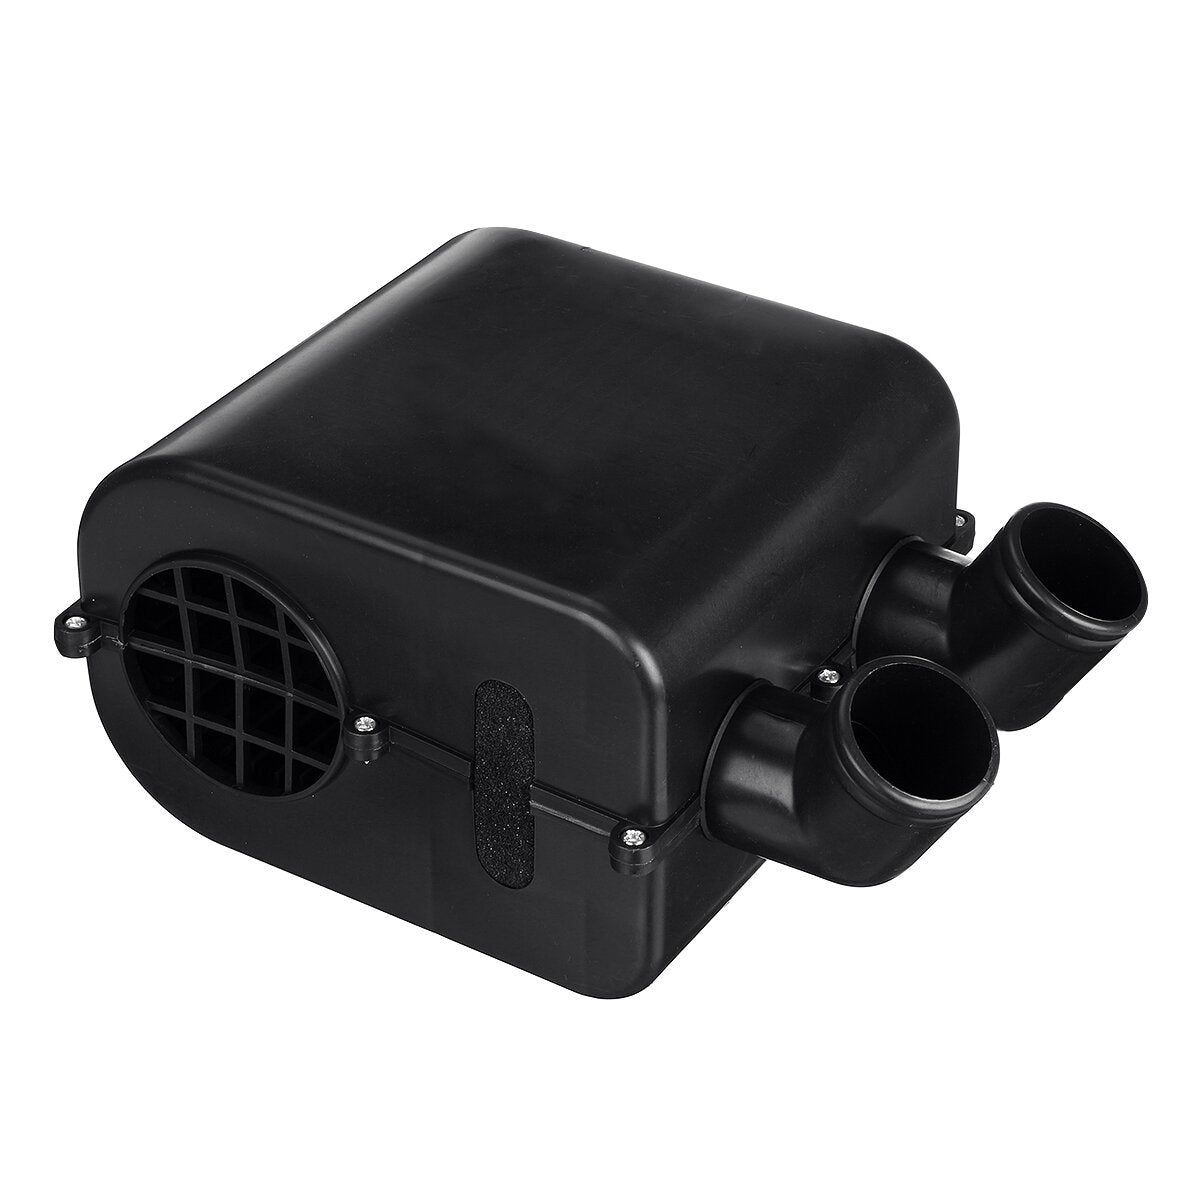 850W Car Truck Portable Auto Heater Heat Cooling Fan Defroster Demister